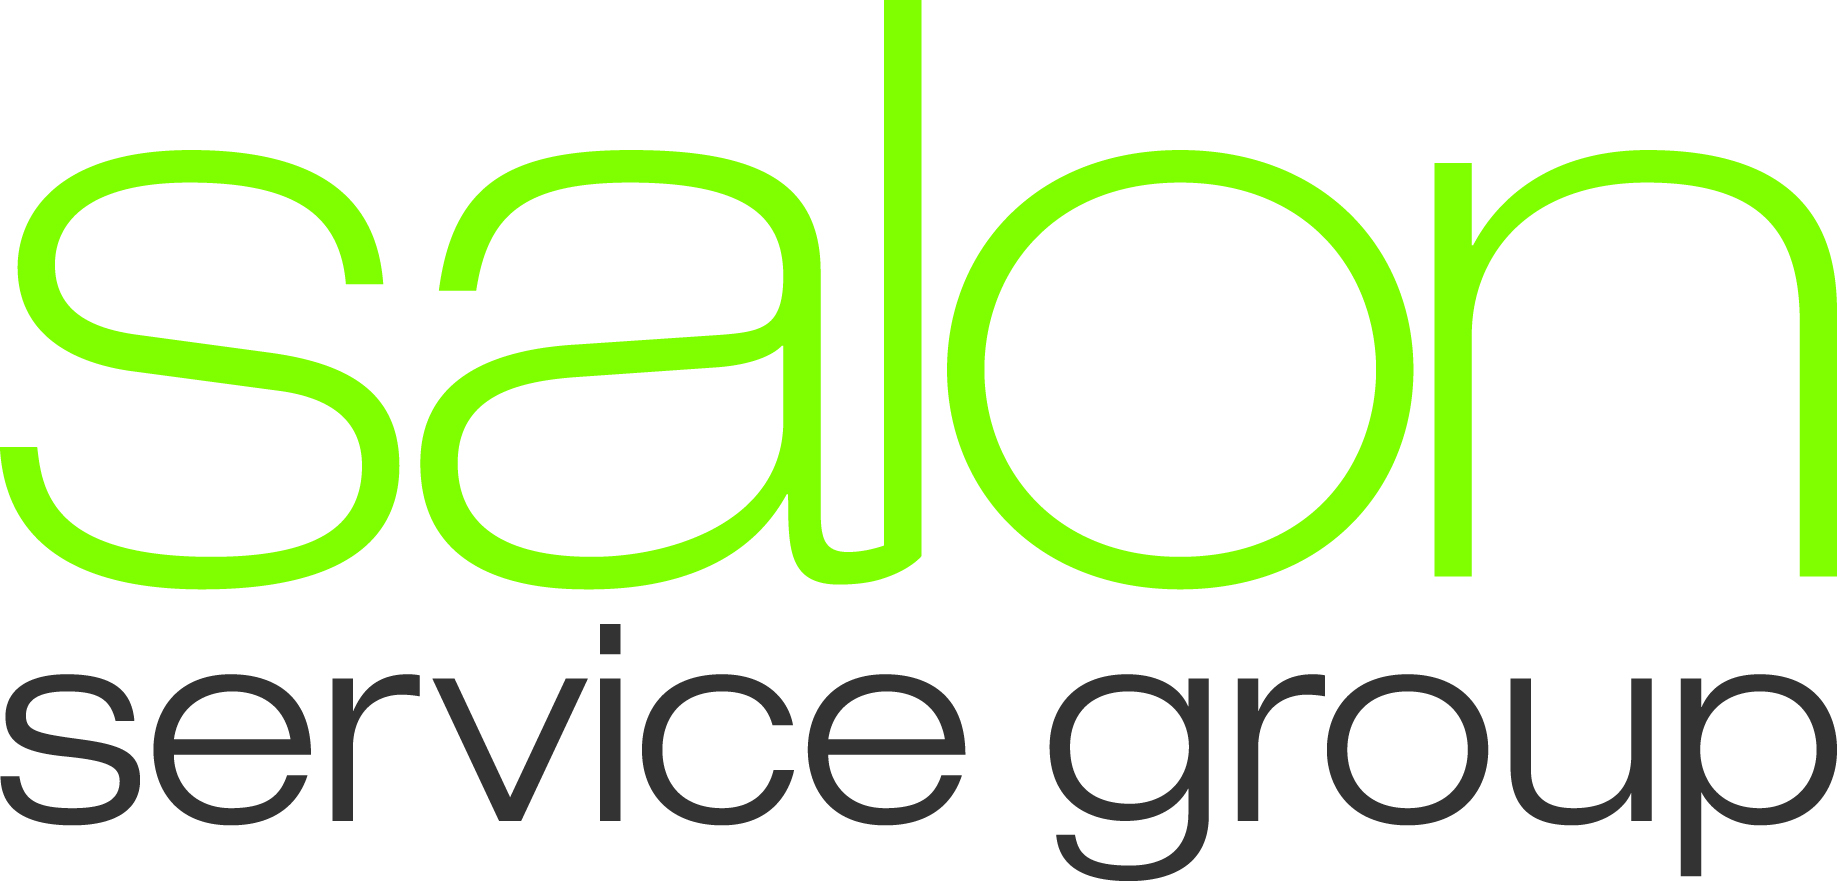 Salon Service Group